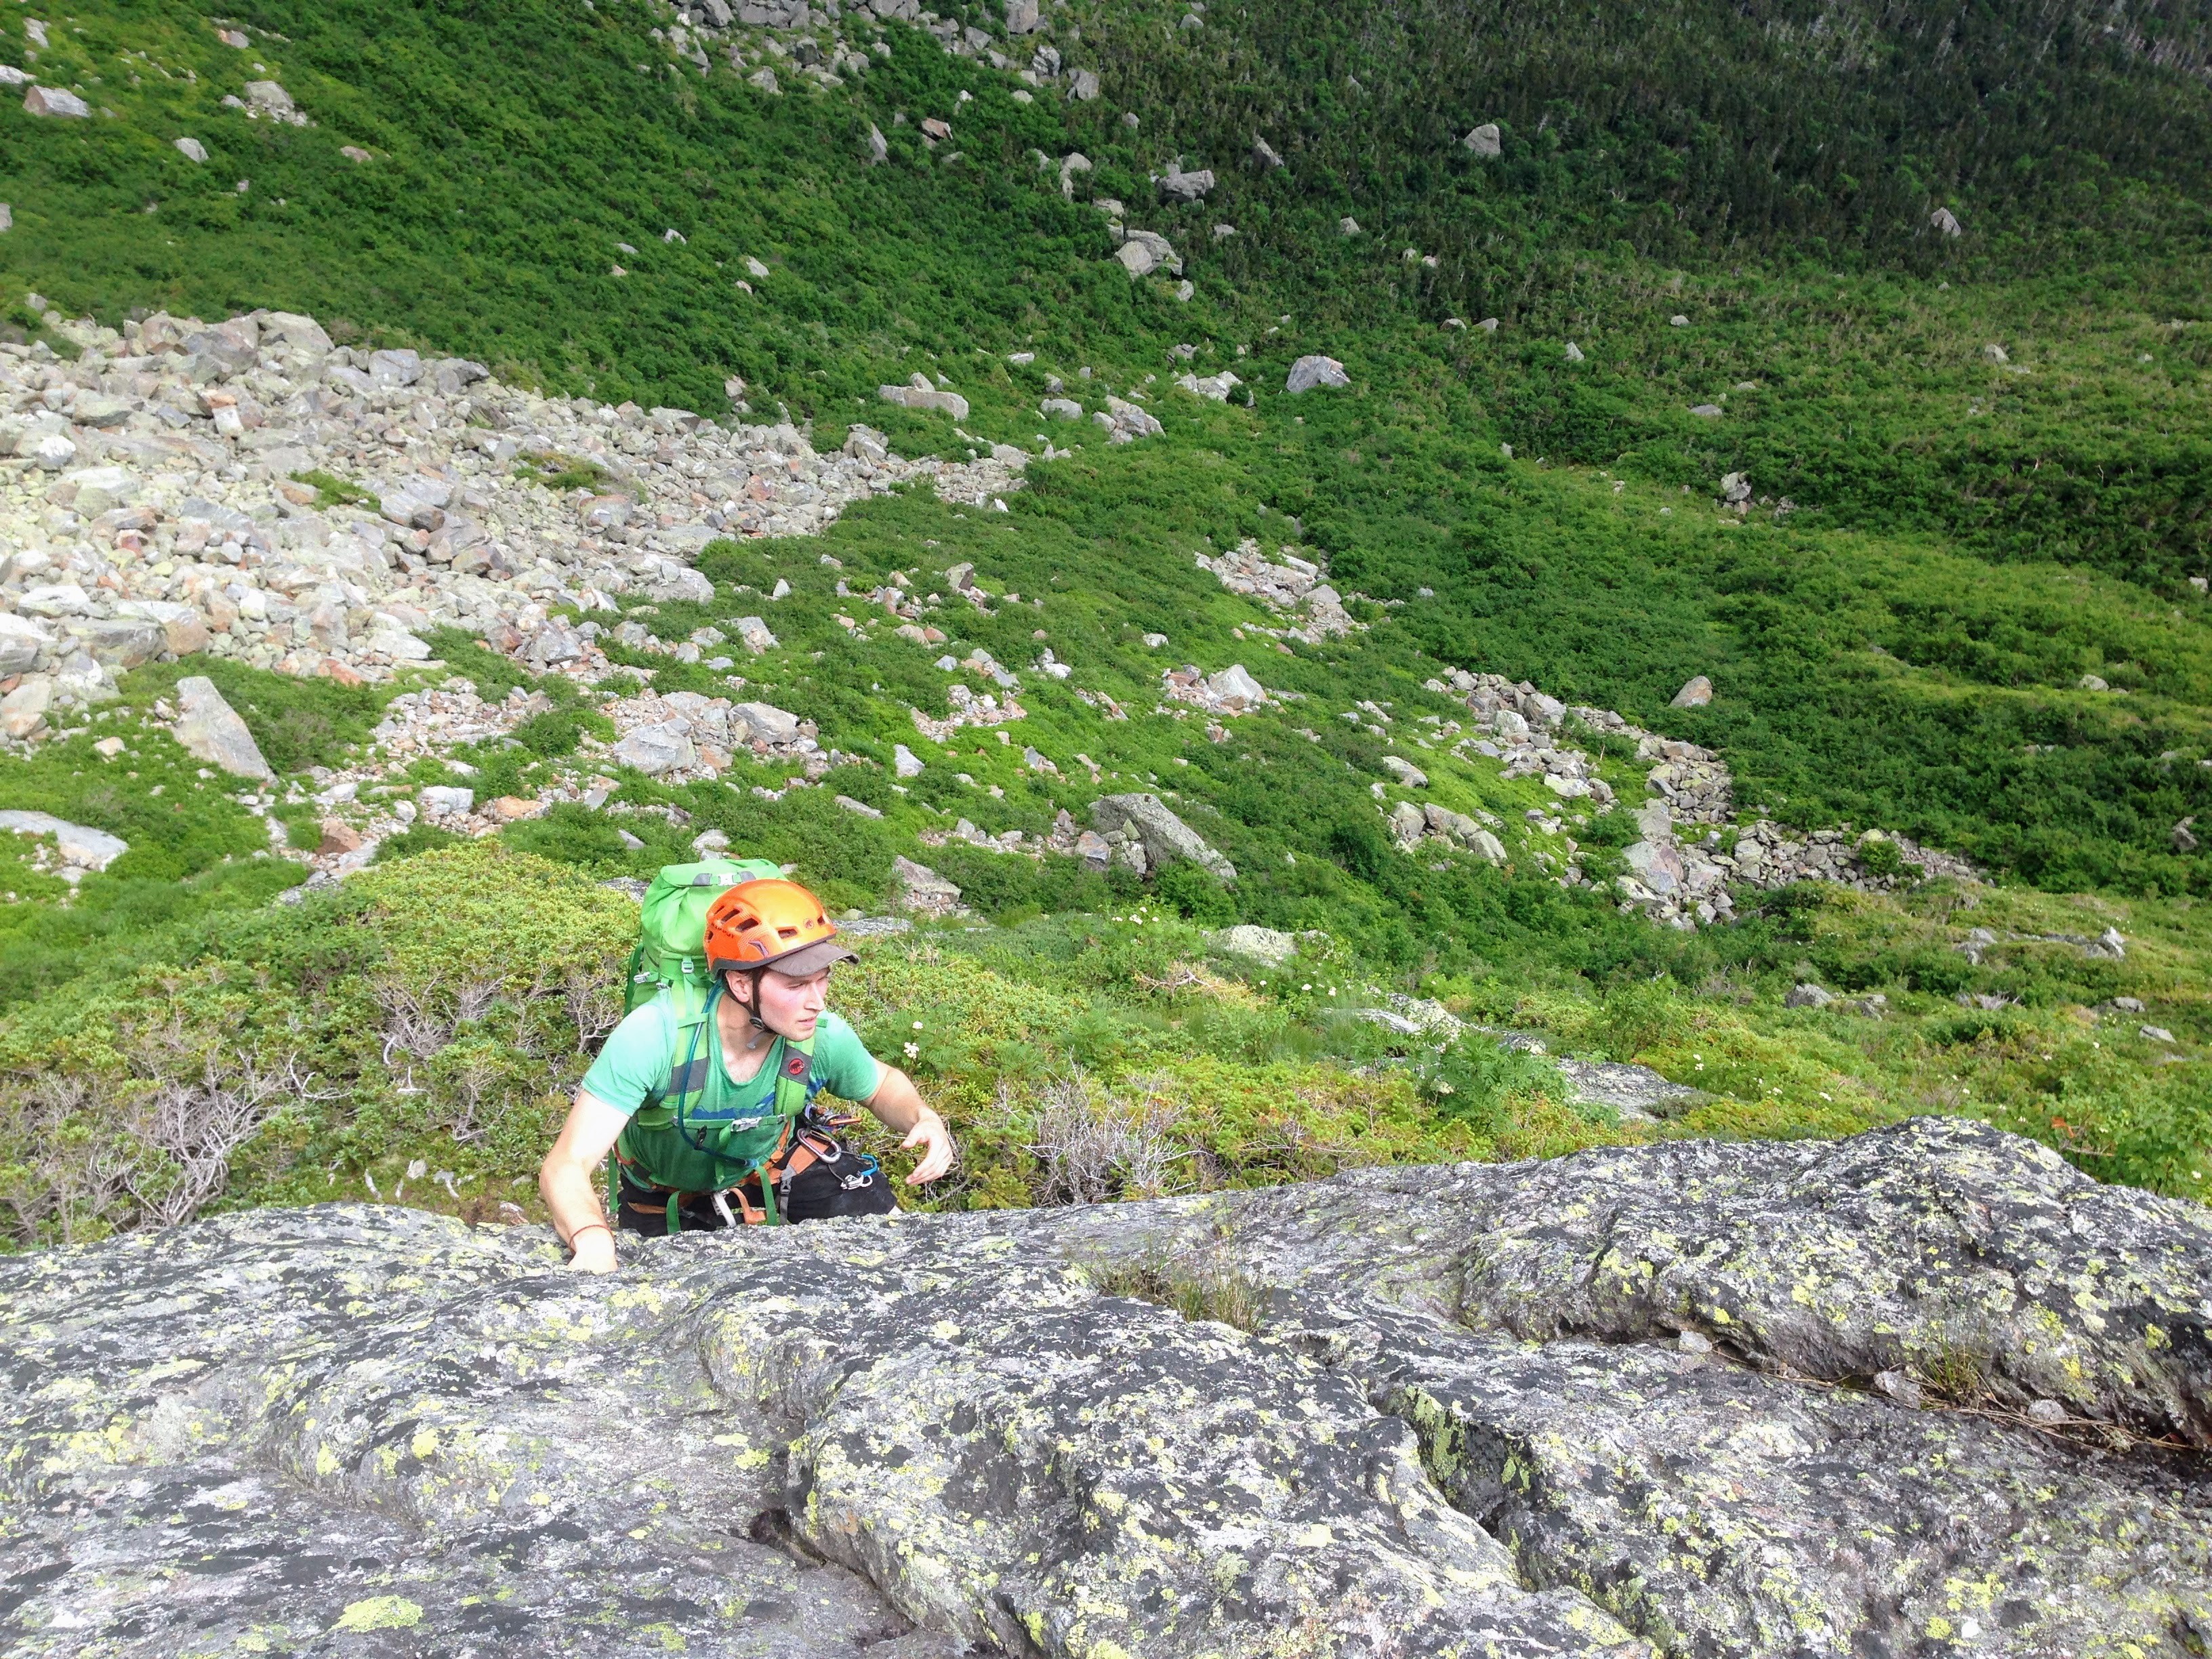 Chris free soloing on the NE Ridge of the Pinnacle